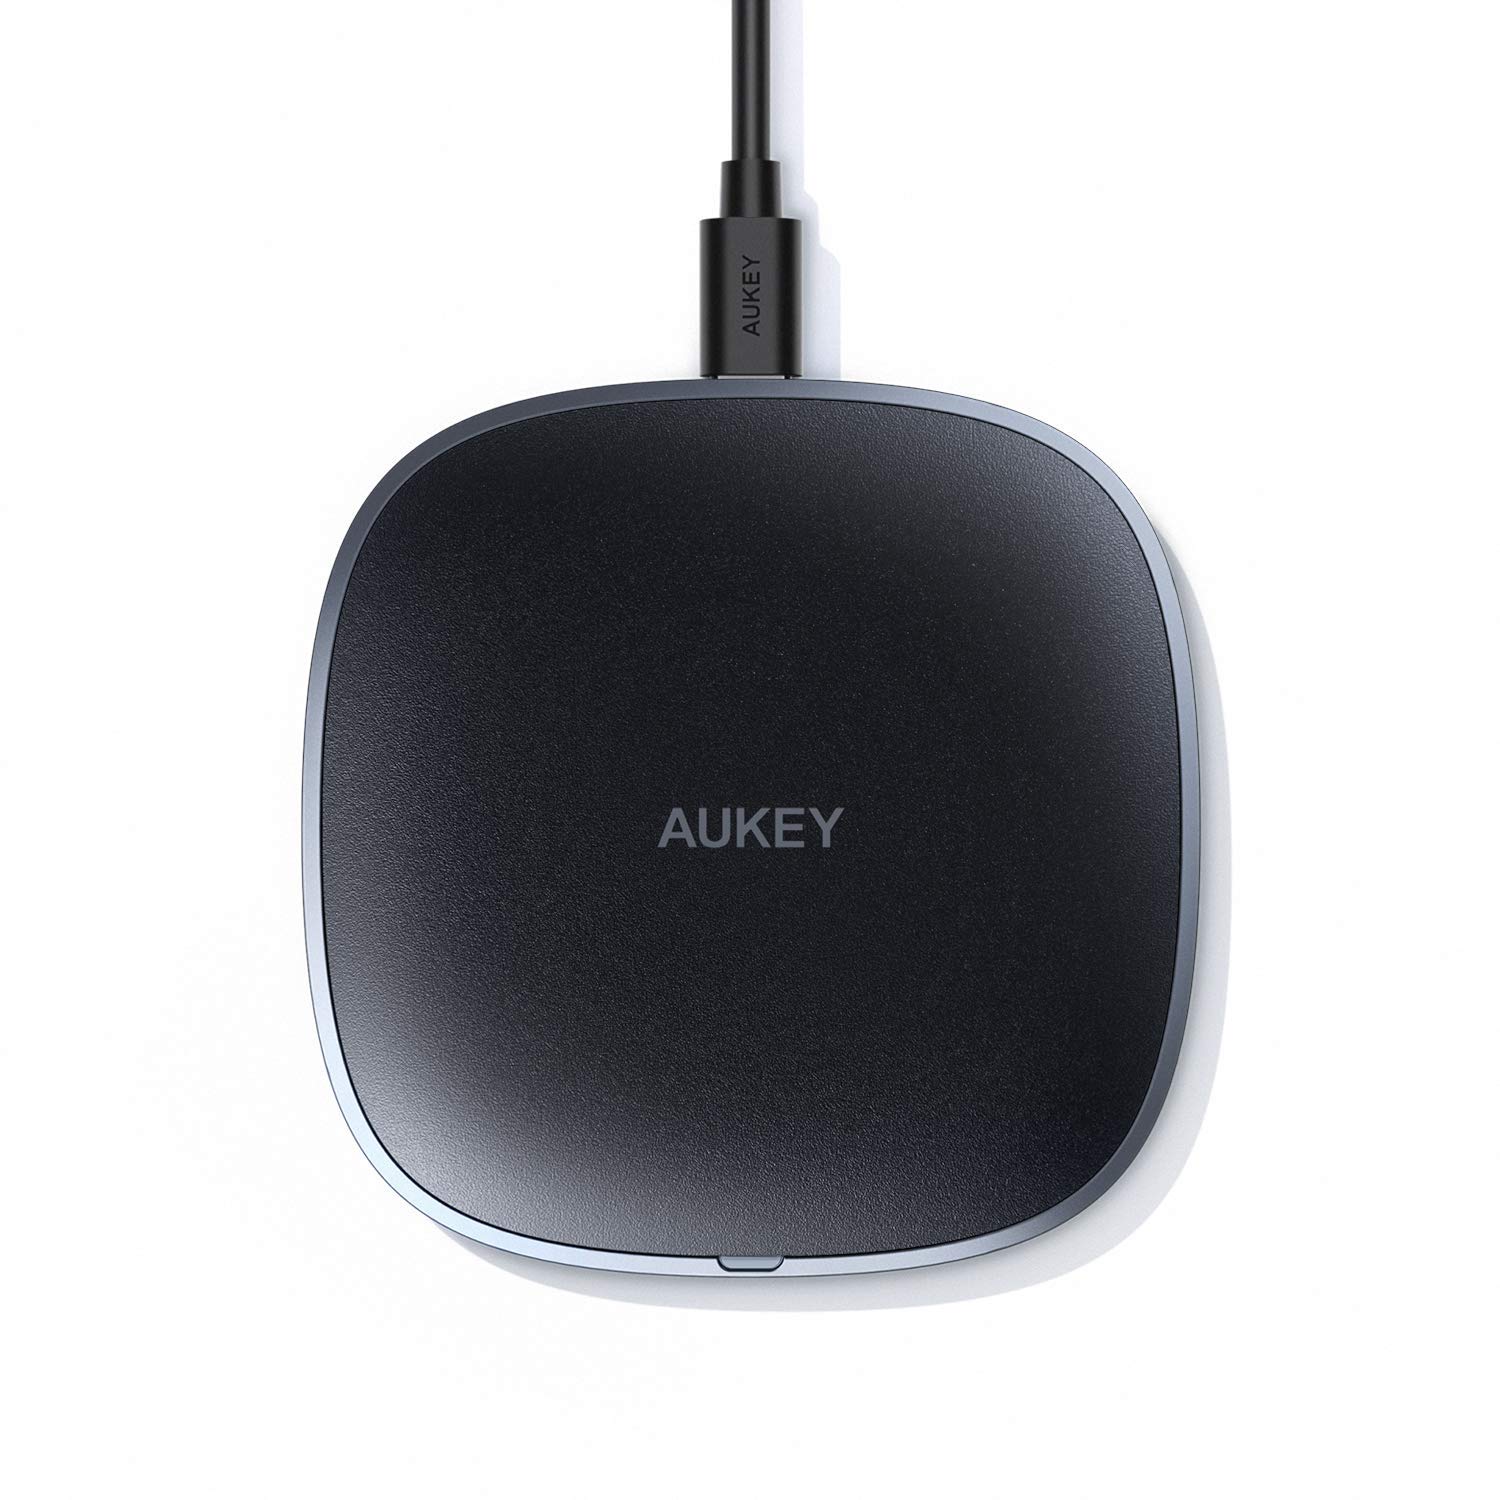 Aukey 5W wireless charger